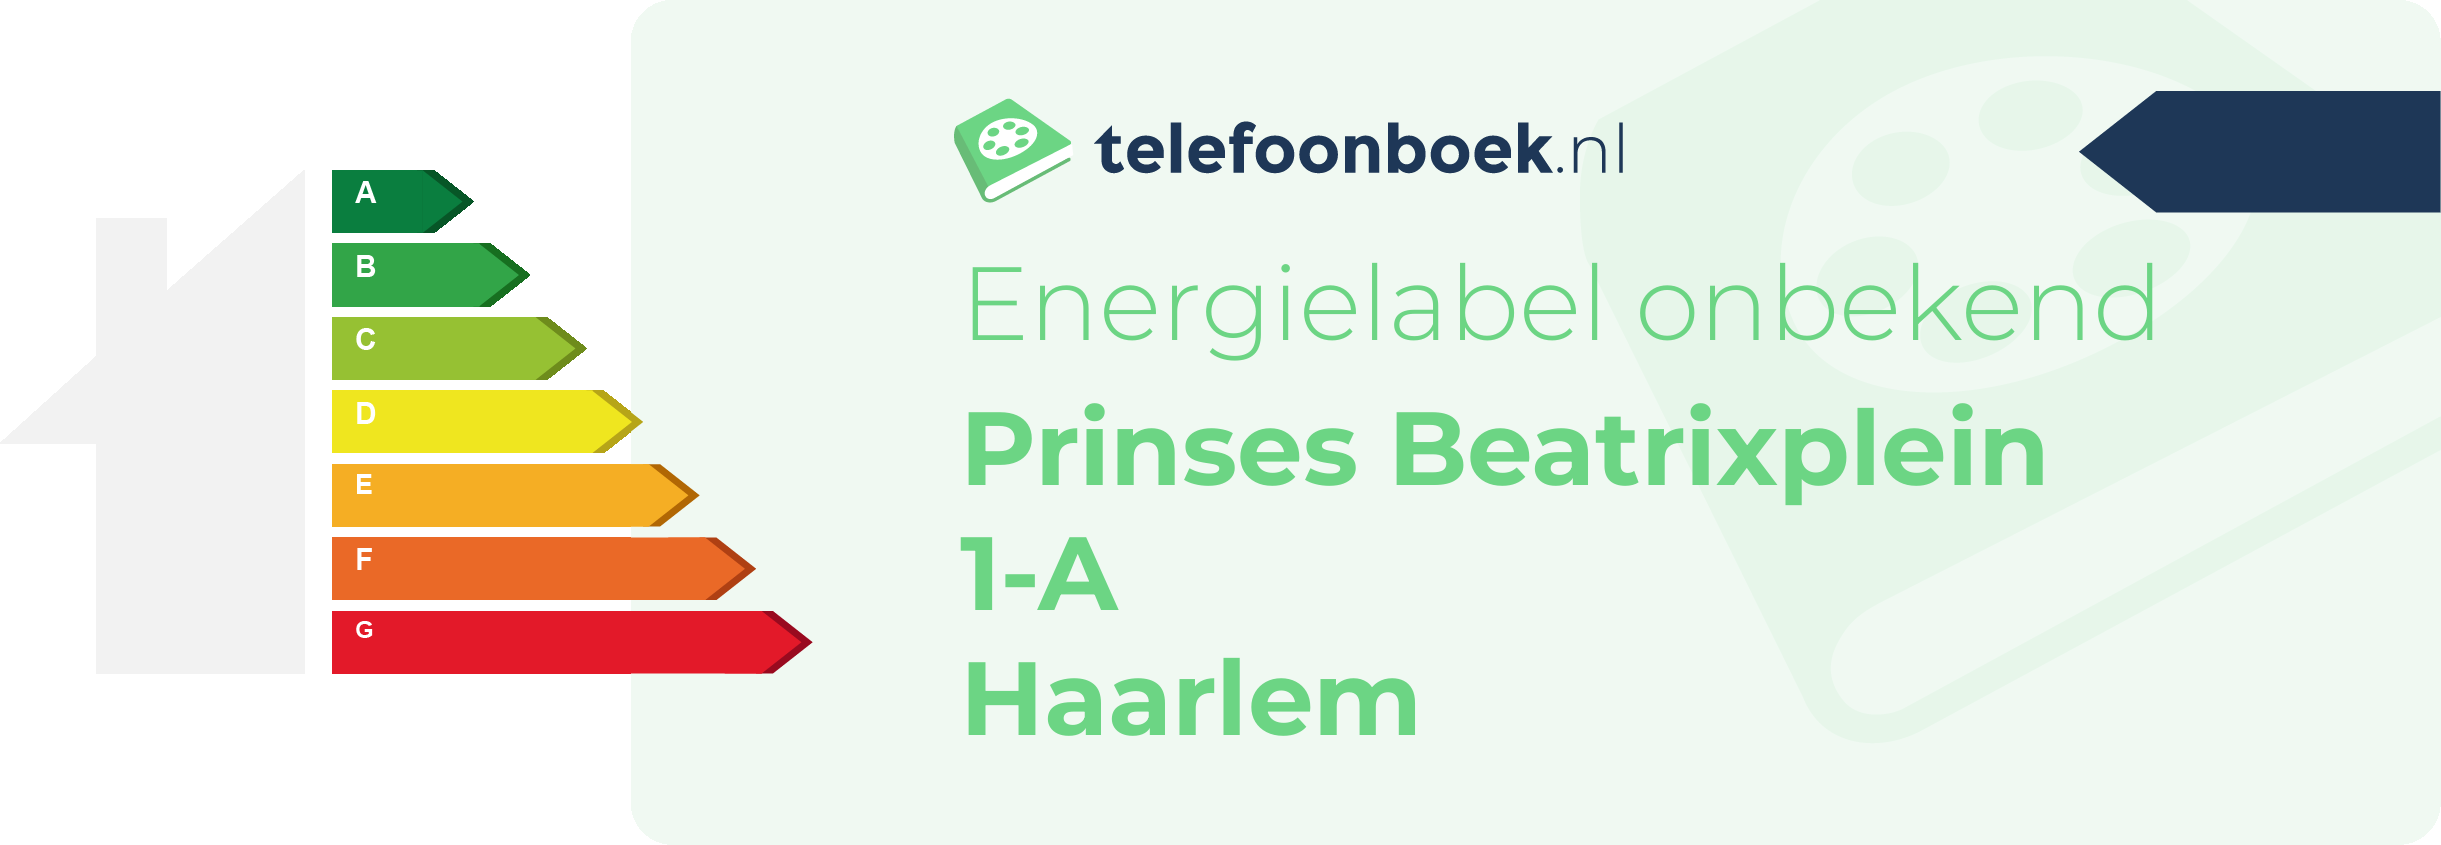 Energielabel Prinses Beatrixplein 1-A Haarlem